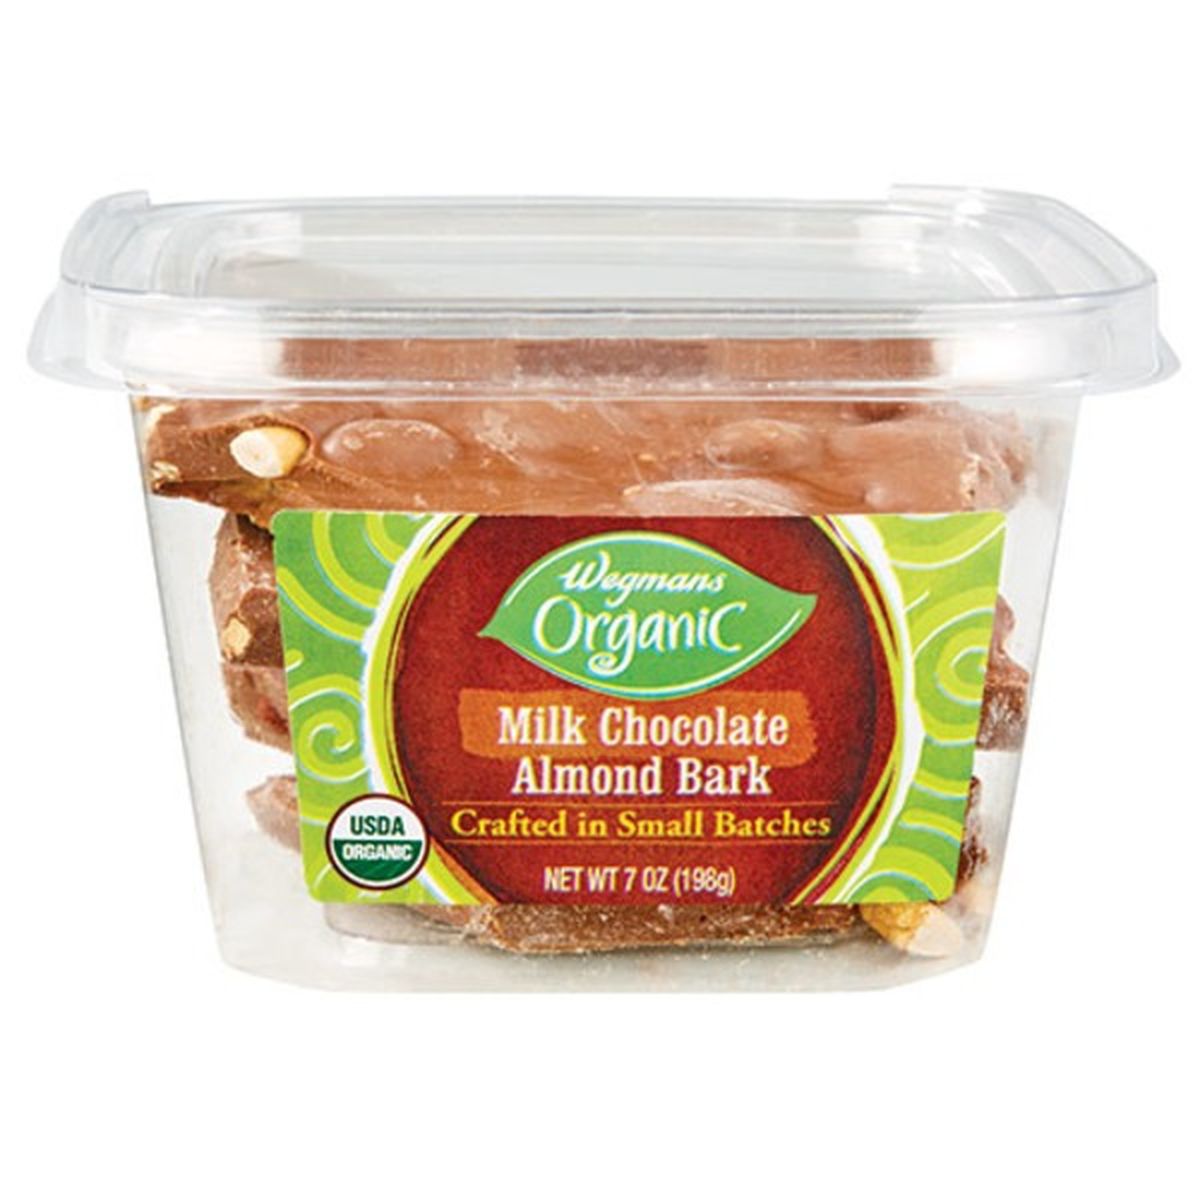 Calories in Wegmans Organic Milk Chocolate Almond Bark